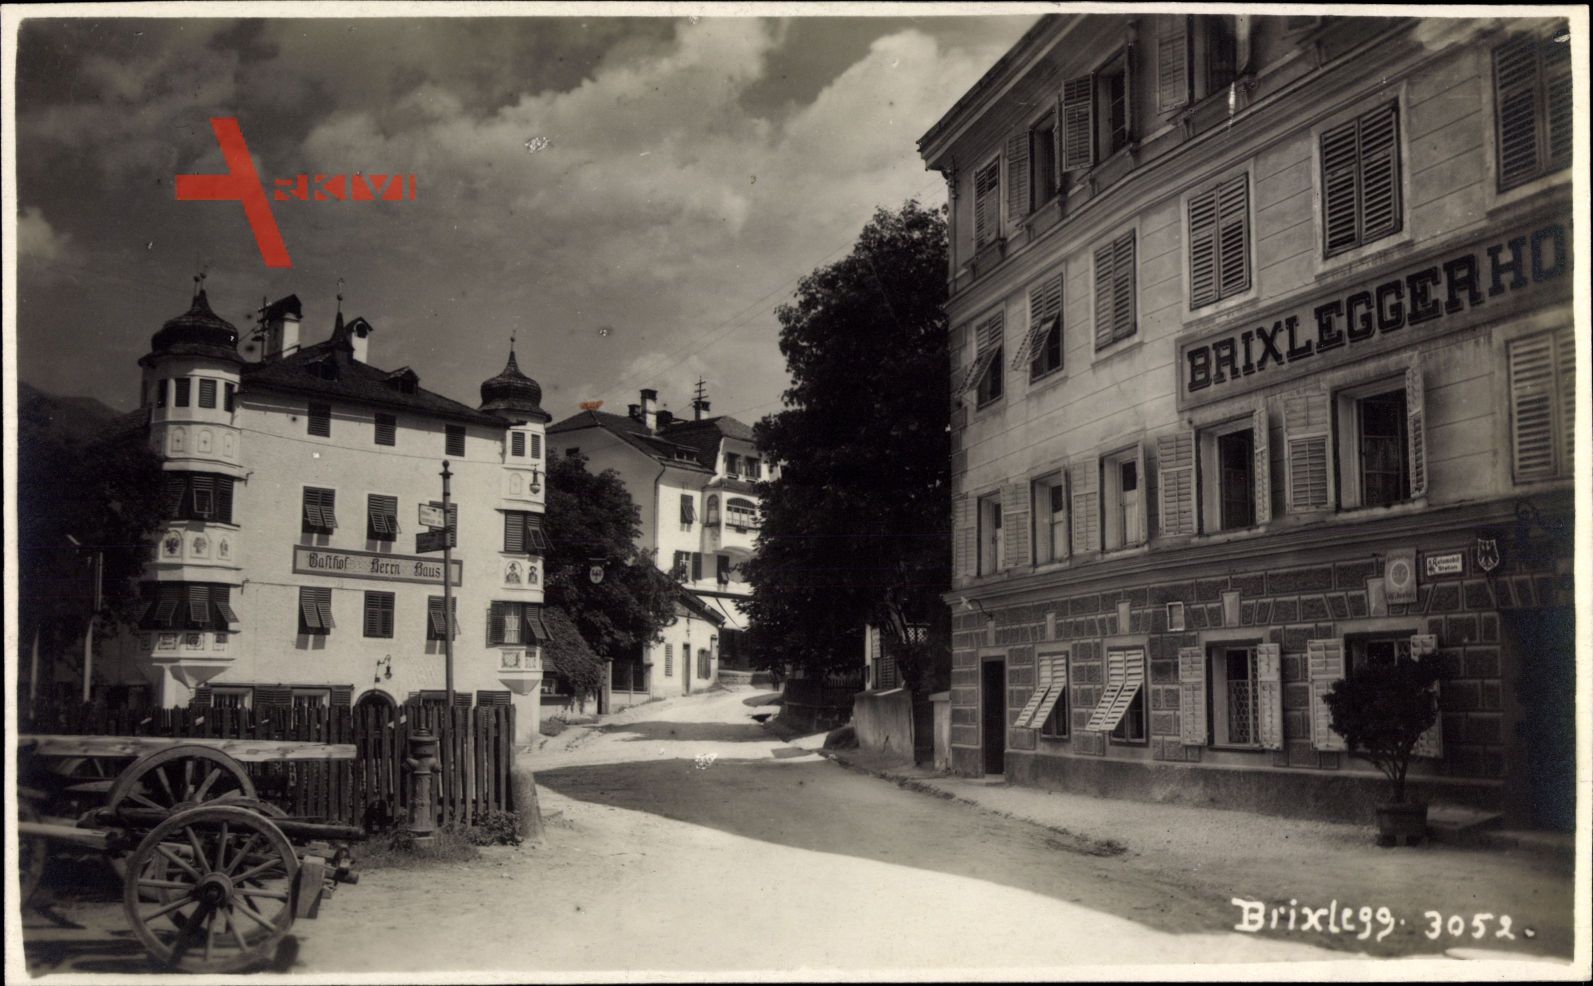 Brixlegg Tirol, Straßenpartie am Brixlegger Hof